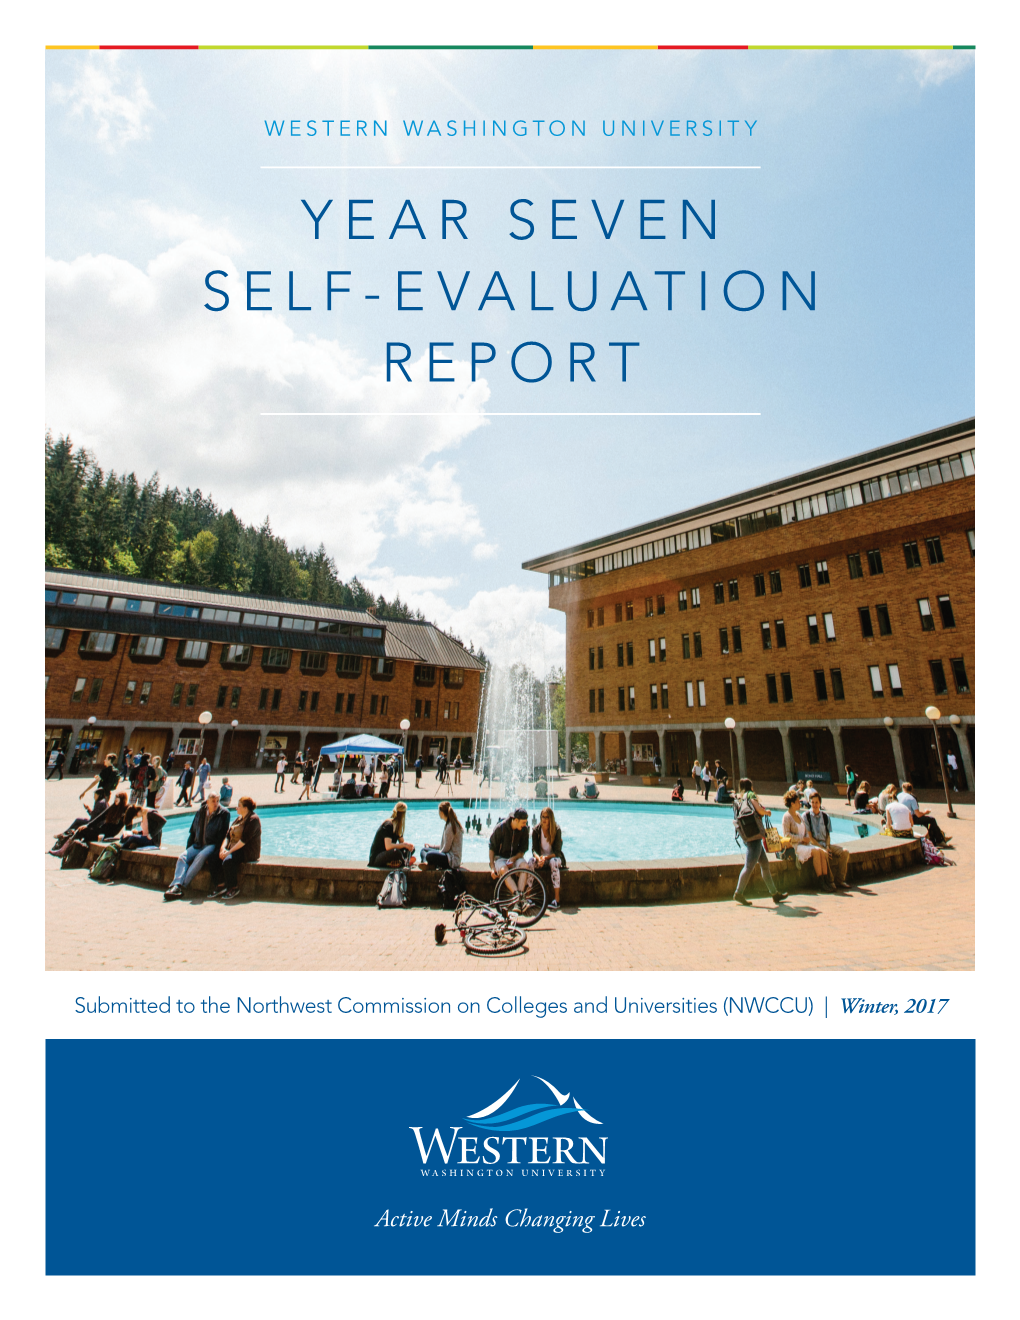 Year 7 Self-Eval Report for Western Washington University